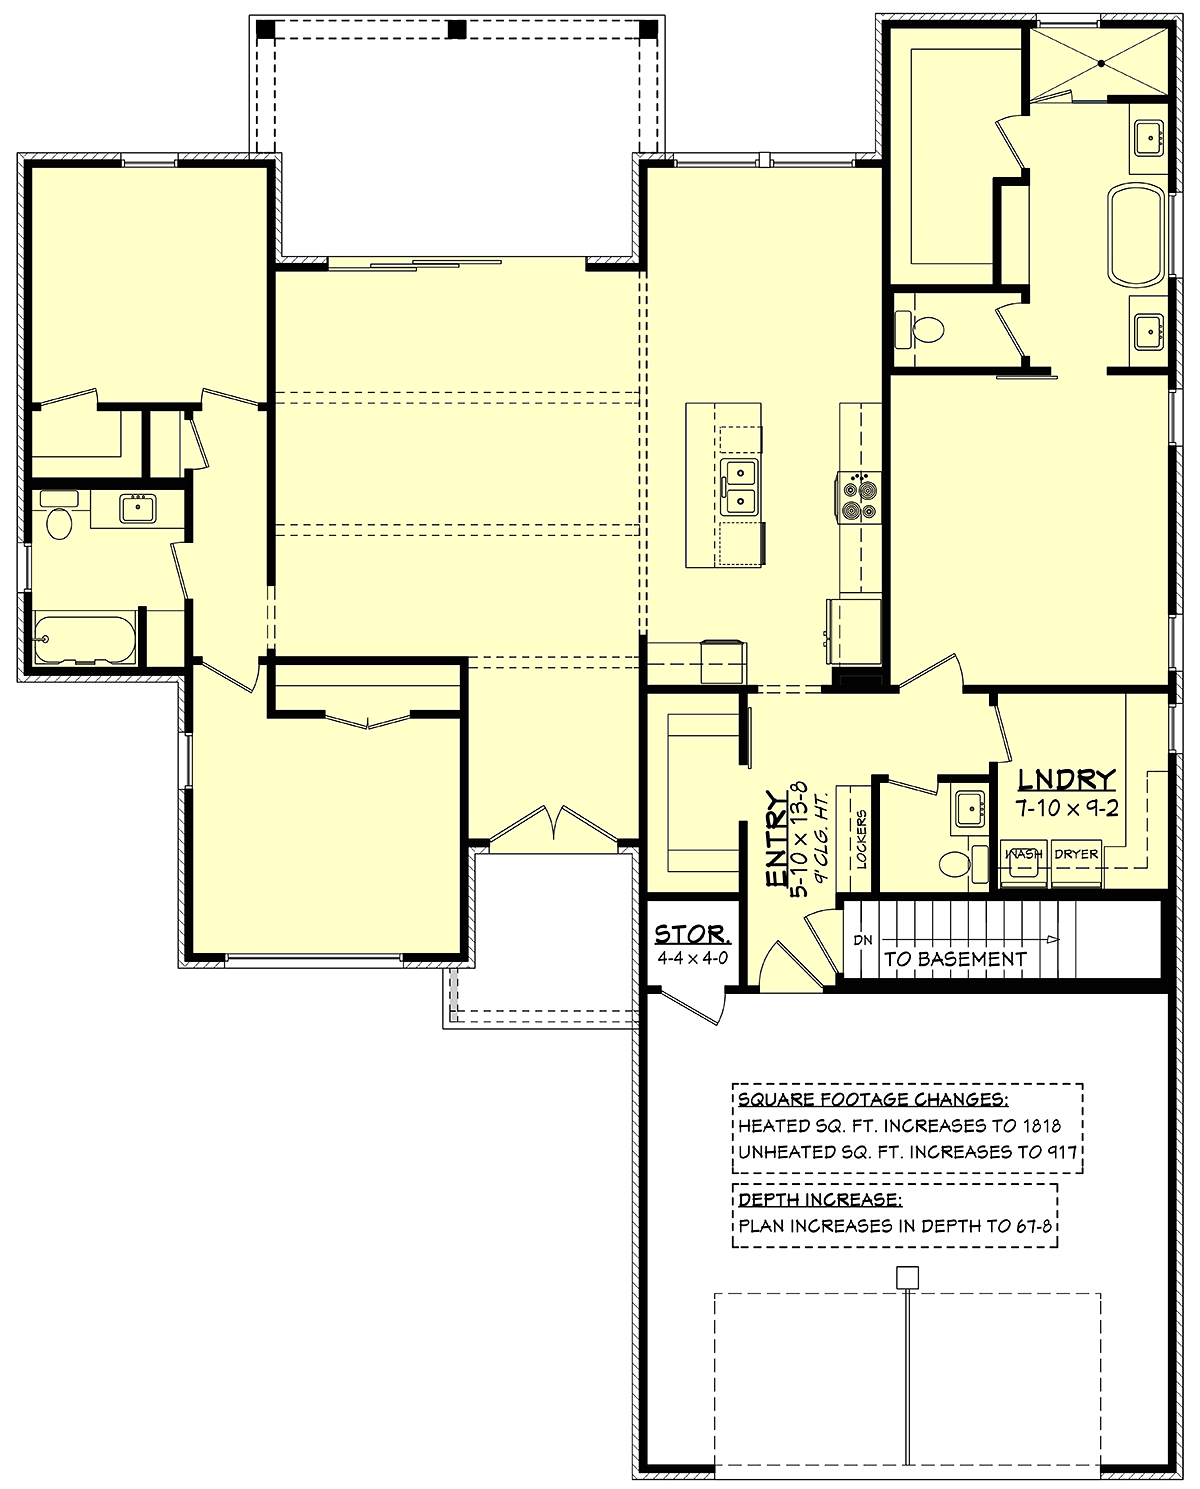 House Plan 80870 Alternate Level One